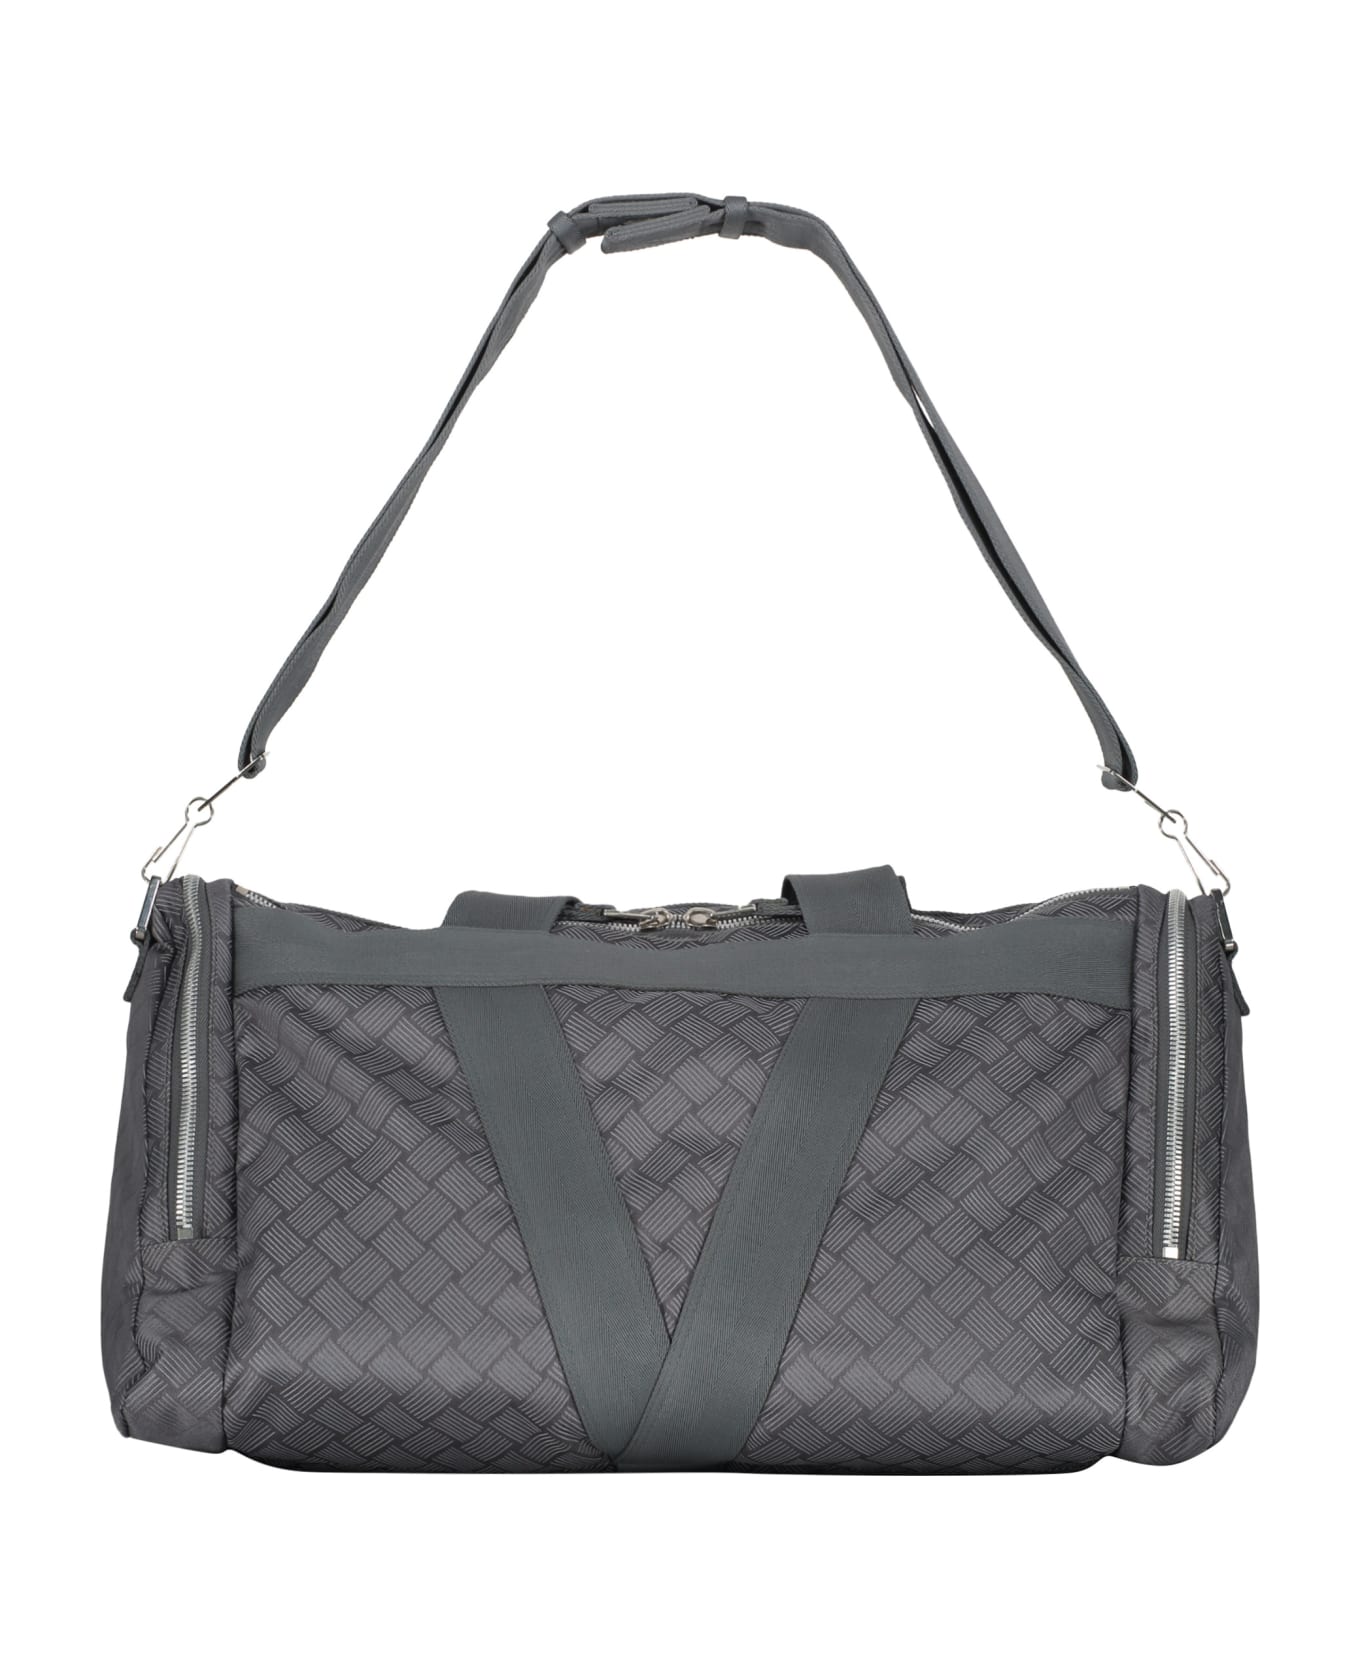 Bottega Veneta Travel Bag - grey